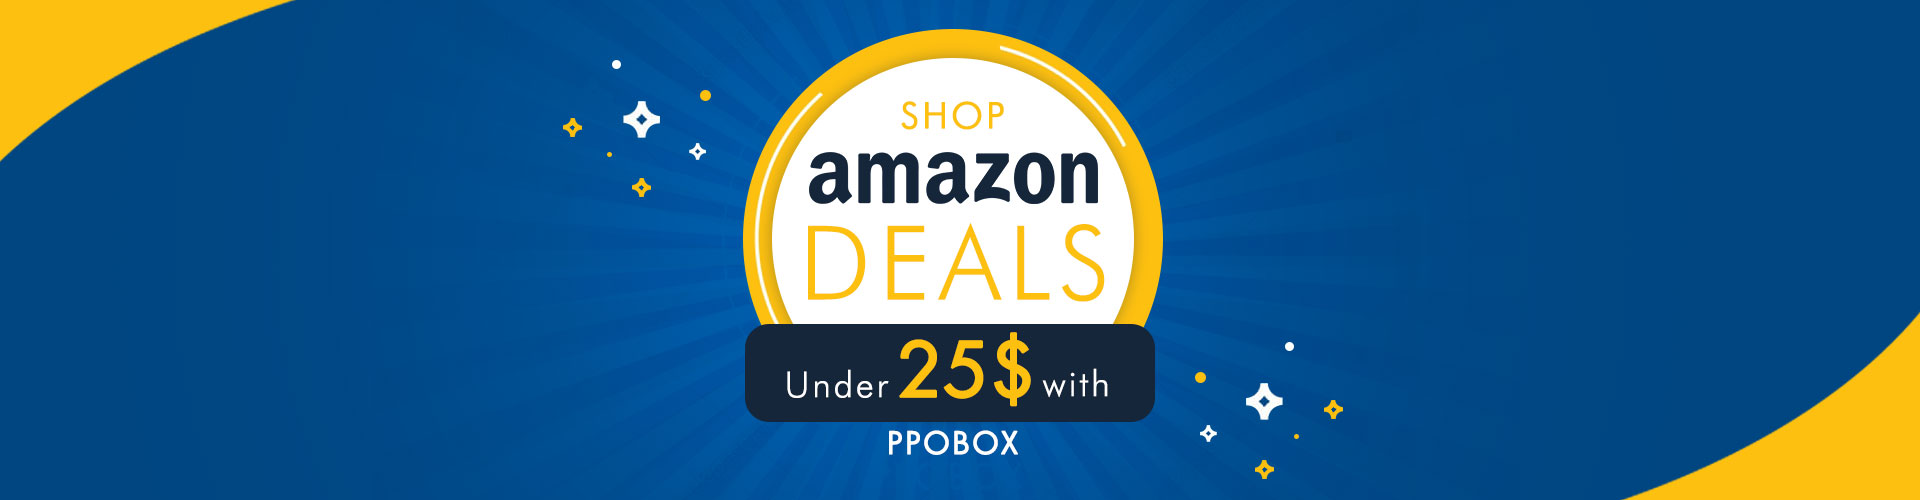 Amazon Deal